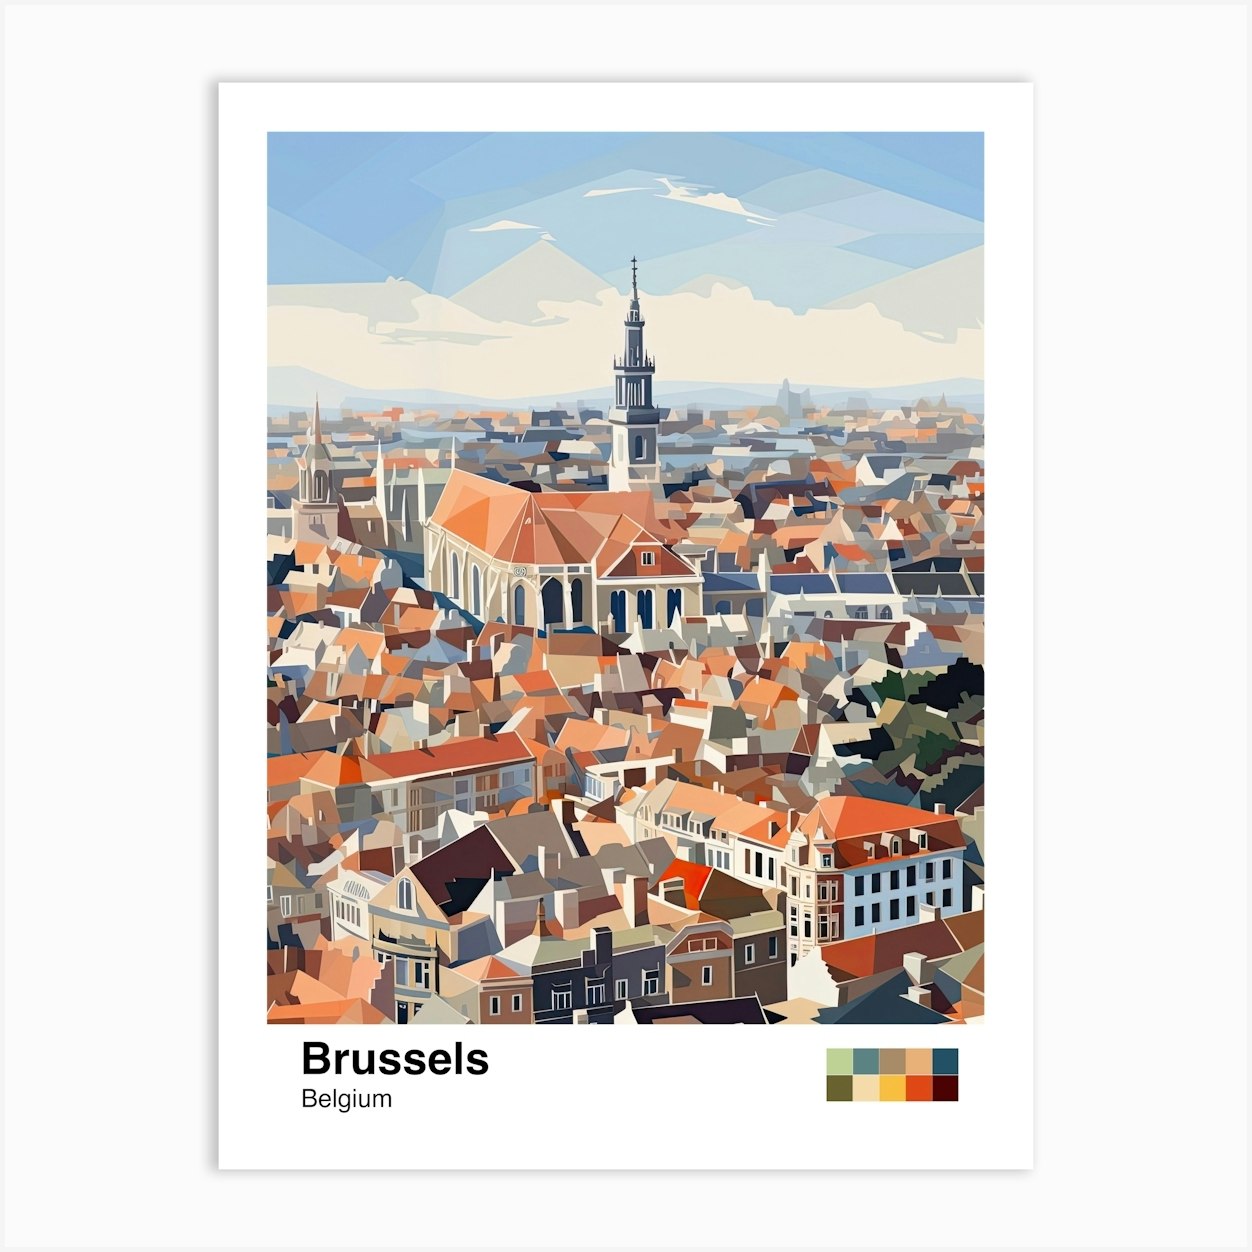 1 Geometric Poster - Brussels, Geometric Art Print by Wonders Belgium, Gallery Fy Illustration